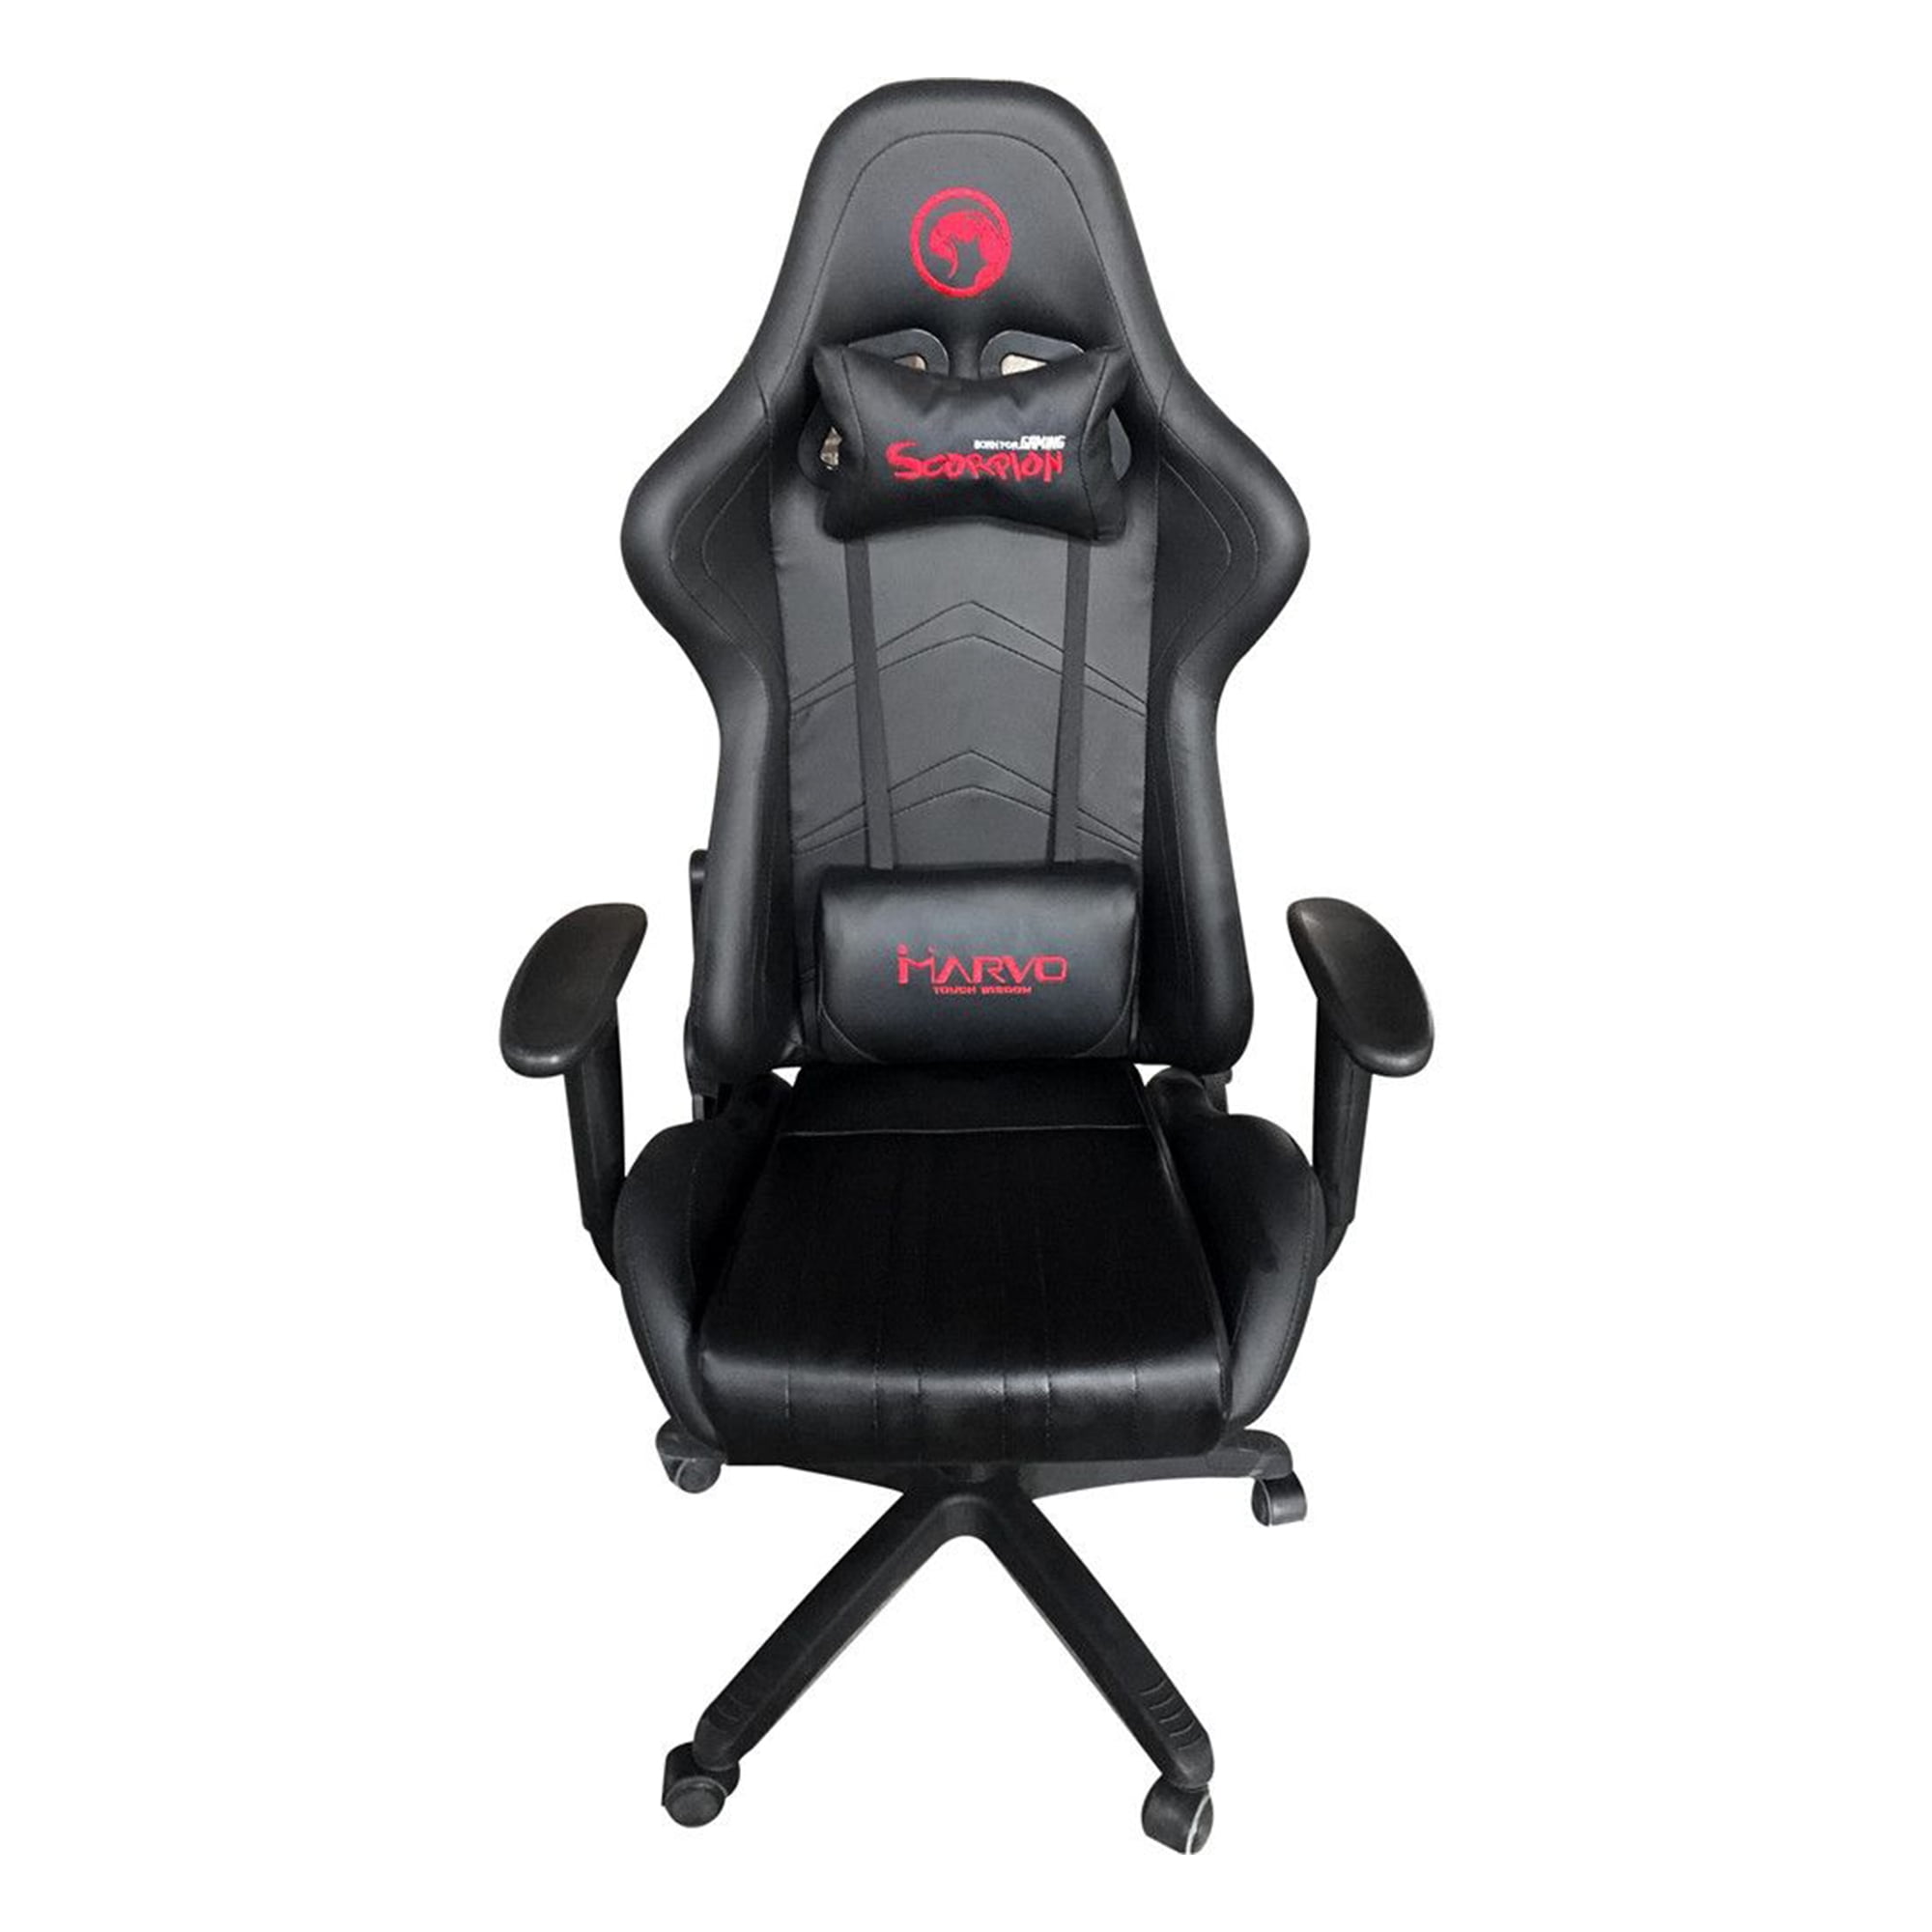  Marvo  Scorpion  CH 106 Adjustable Gaming  Chair  Black 